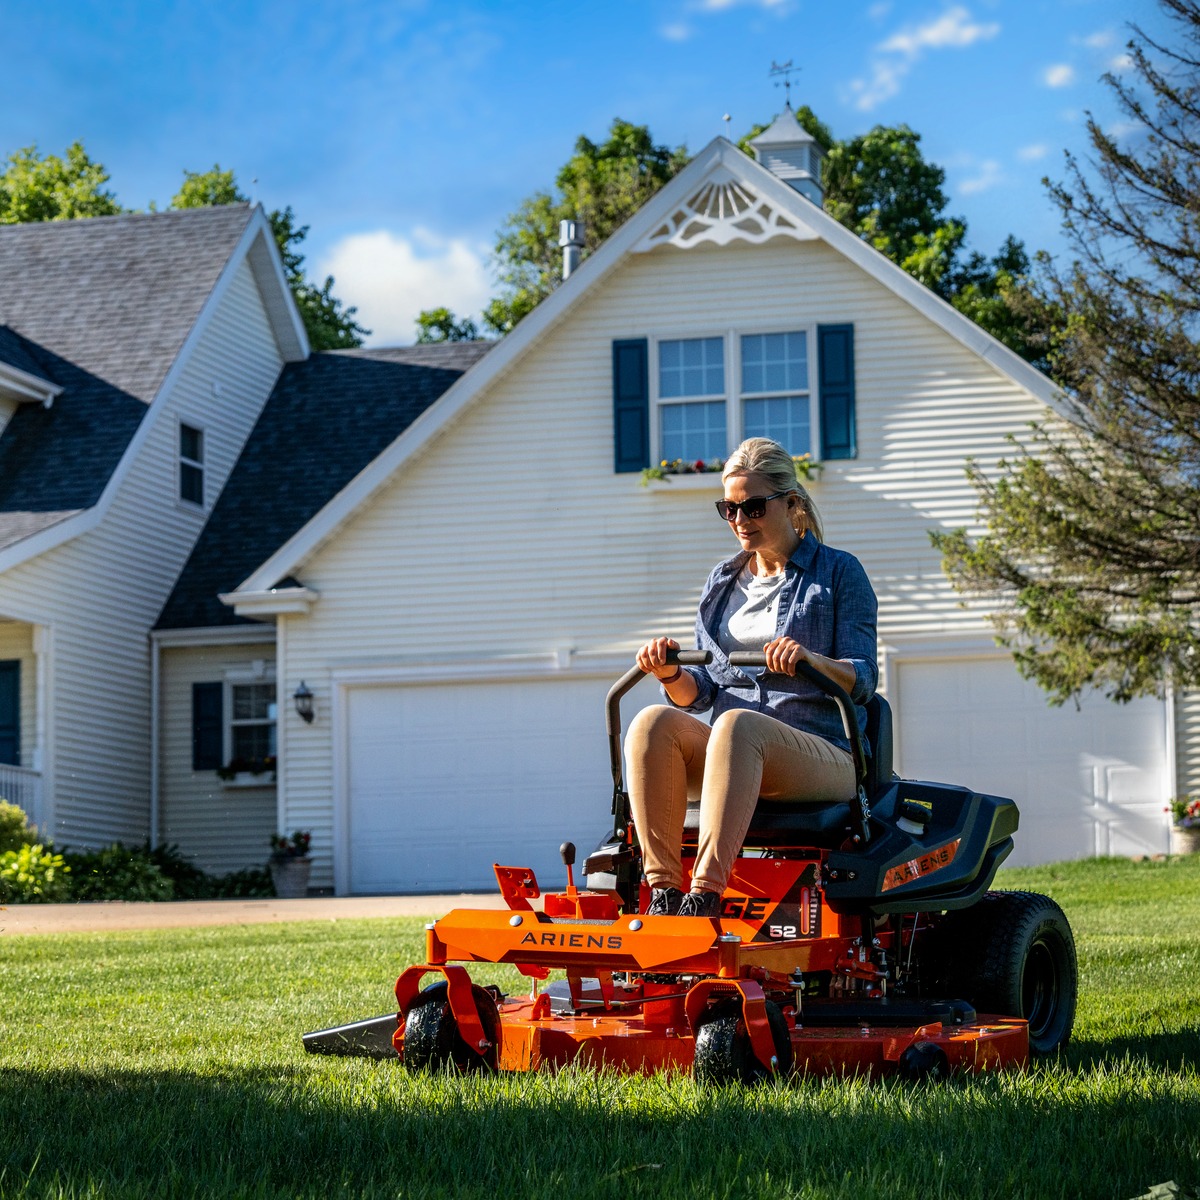 a woman riding a lawn mower in a yard